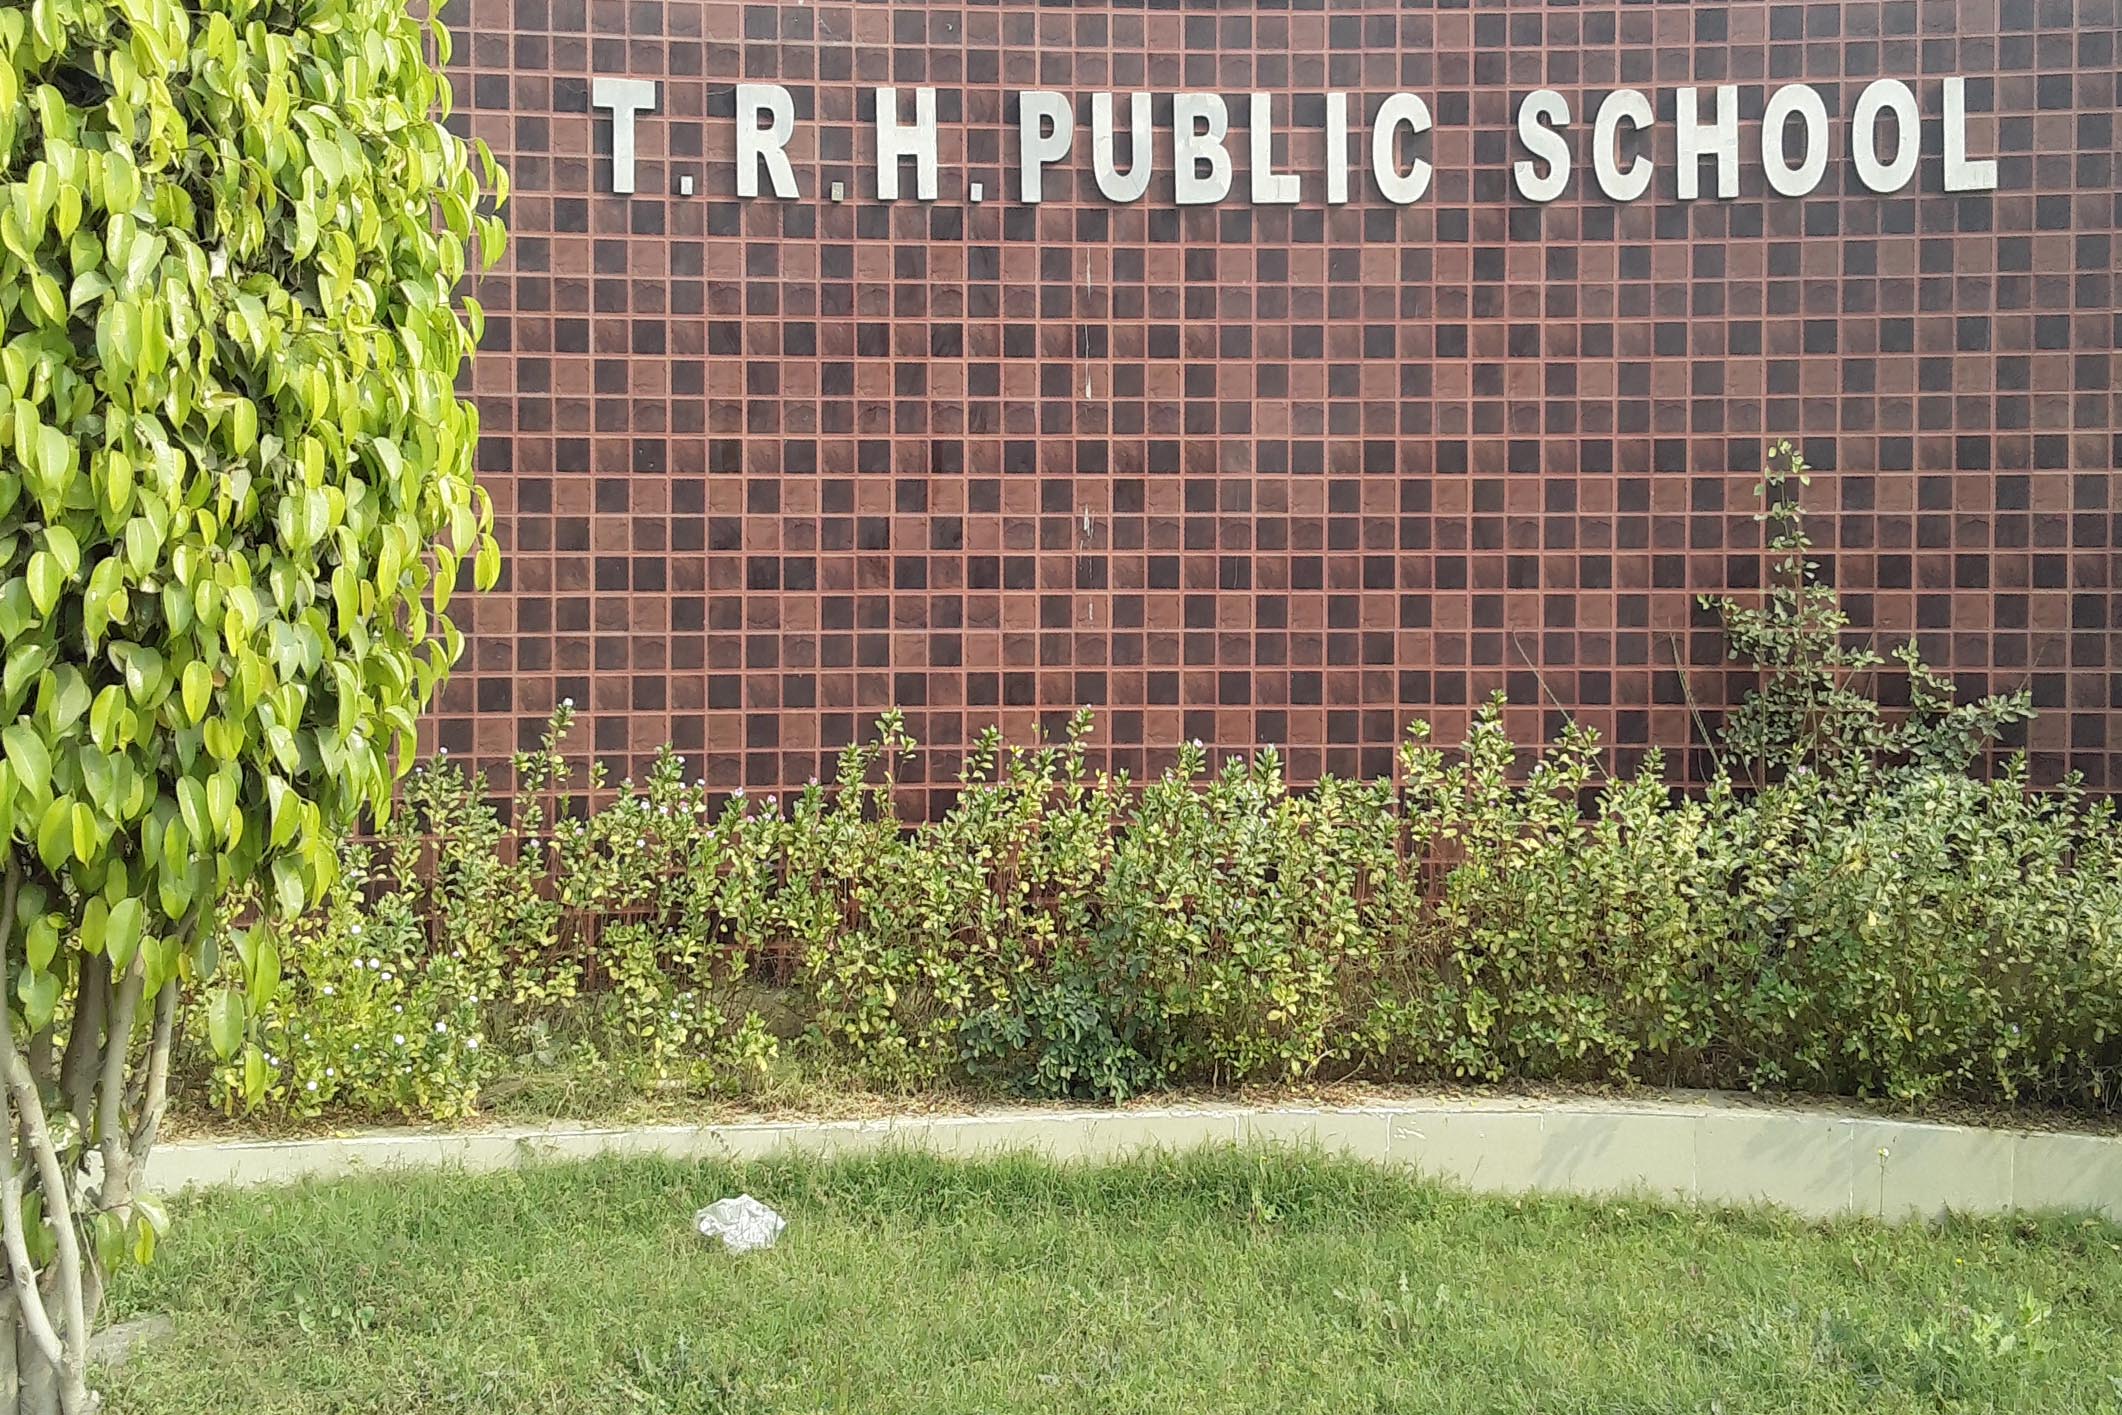 T.R.H Public School Badli Schools 01